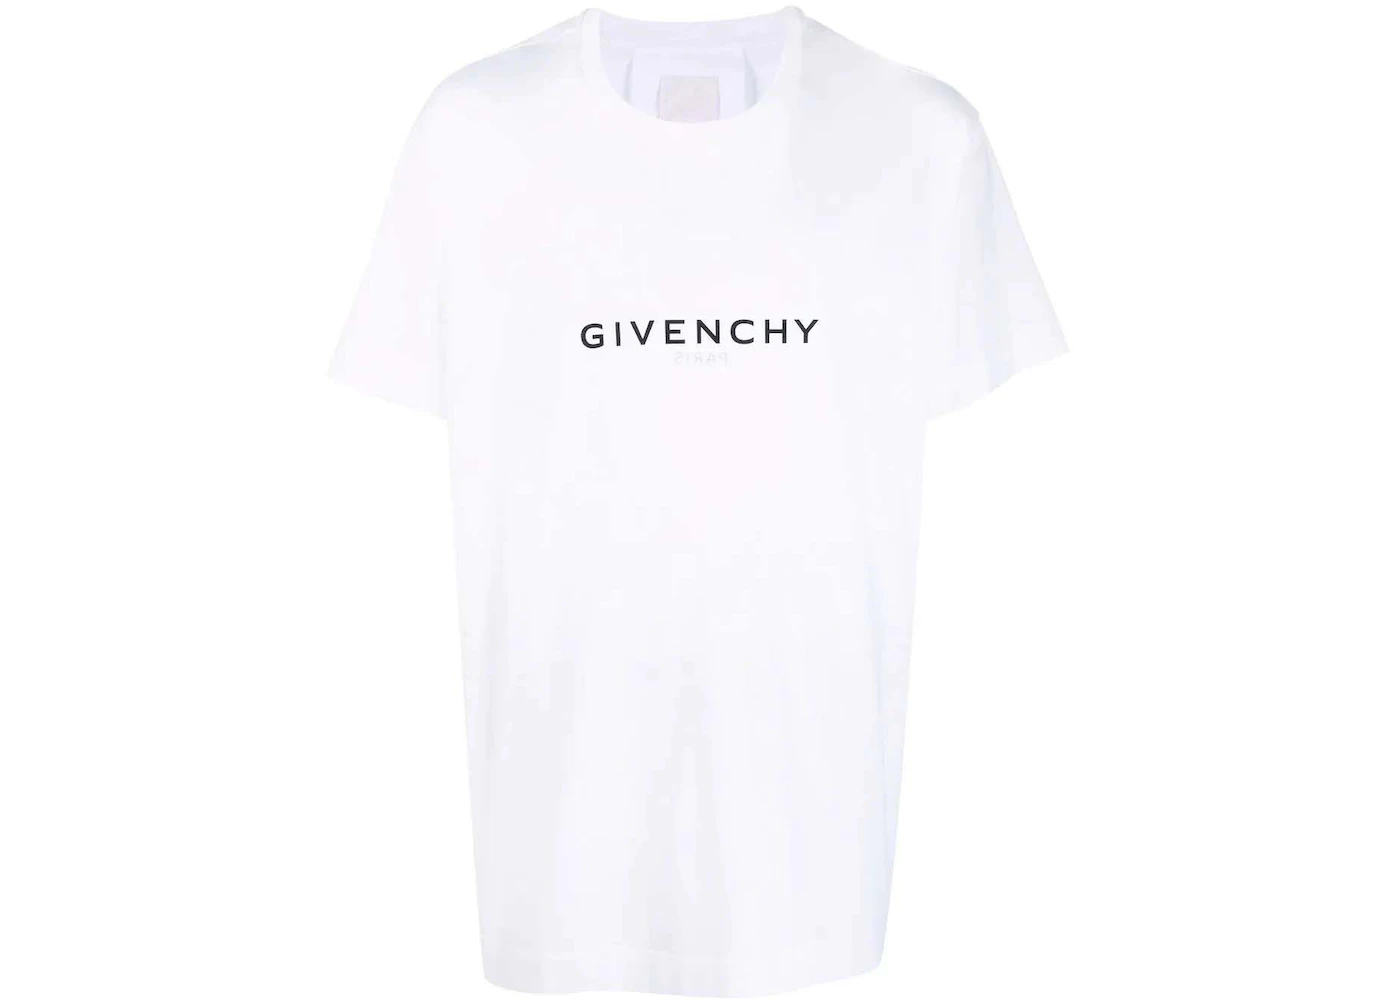 Givenchy Logo T-shirt White/Black - US